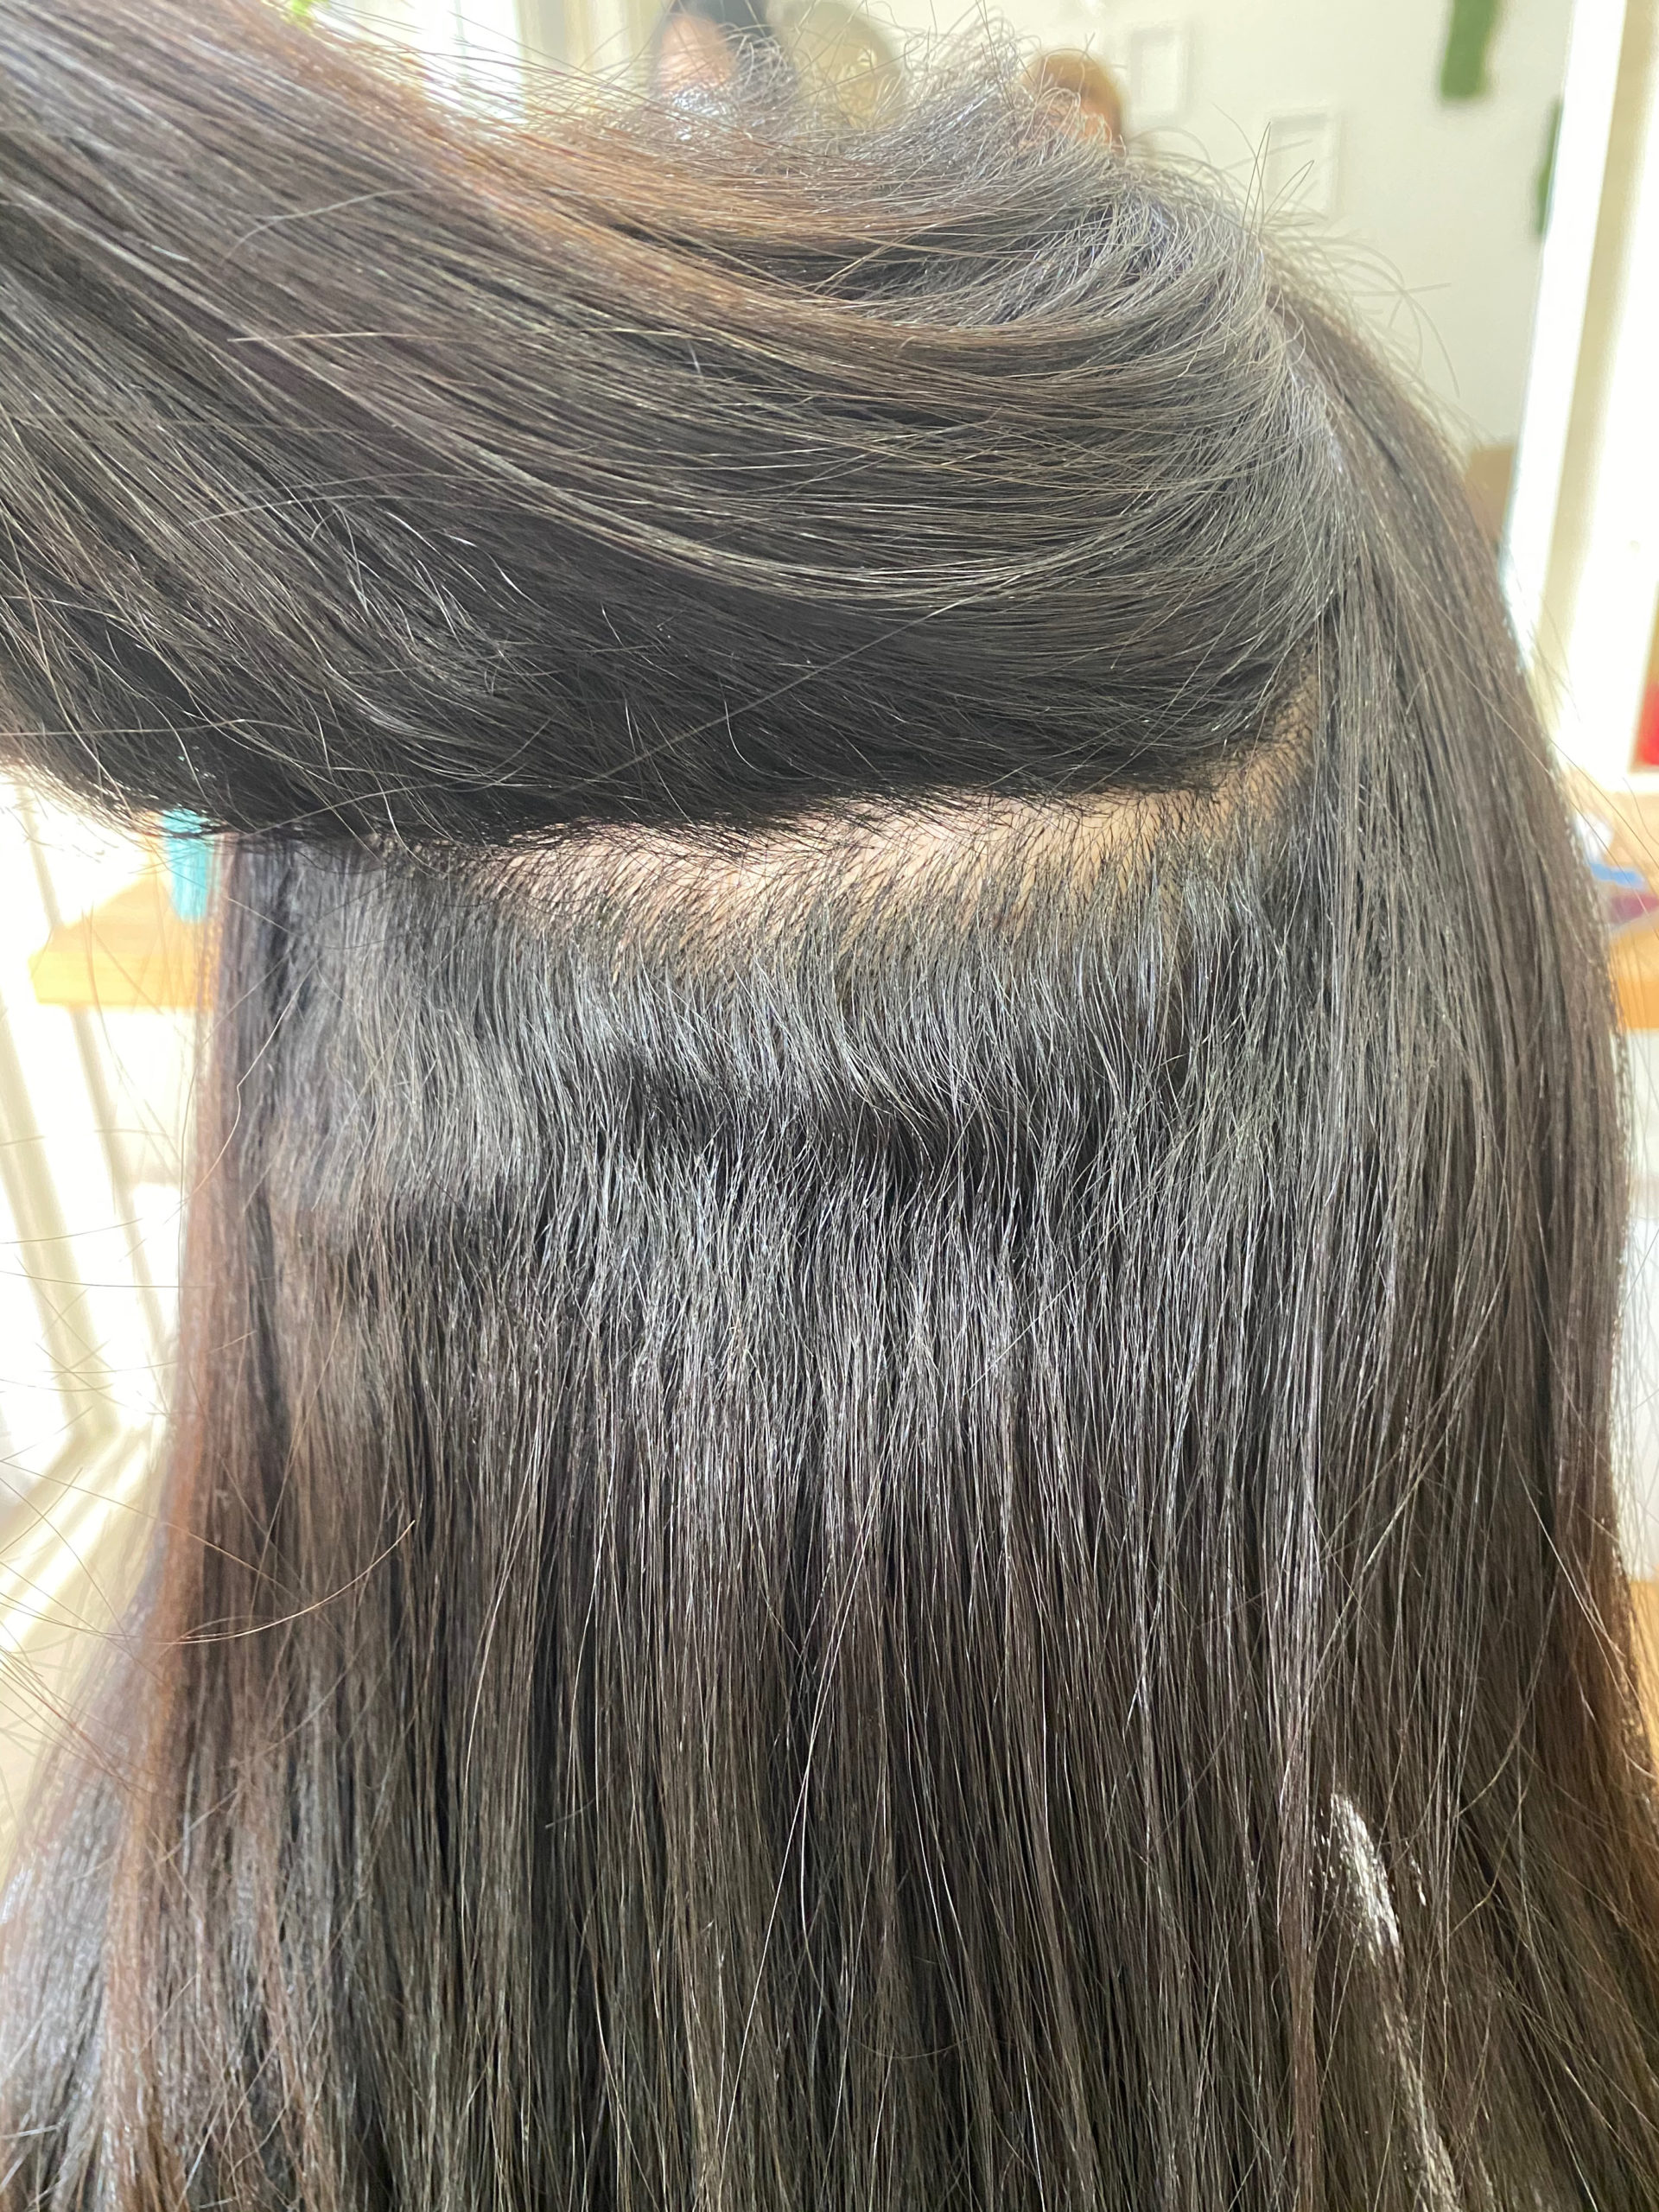 LULUトリートメント×縮毛矯正でパサつく髪を艶髪ストレート。原宿・表参道『髪のお悩みを解決するヘアケア美容師の挑戦』